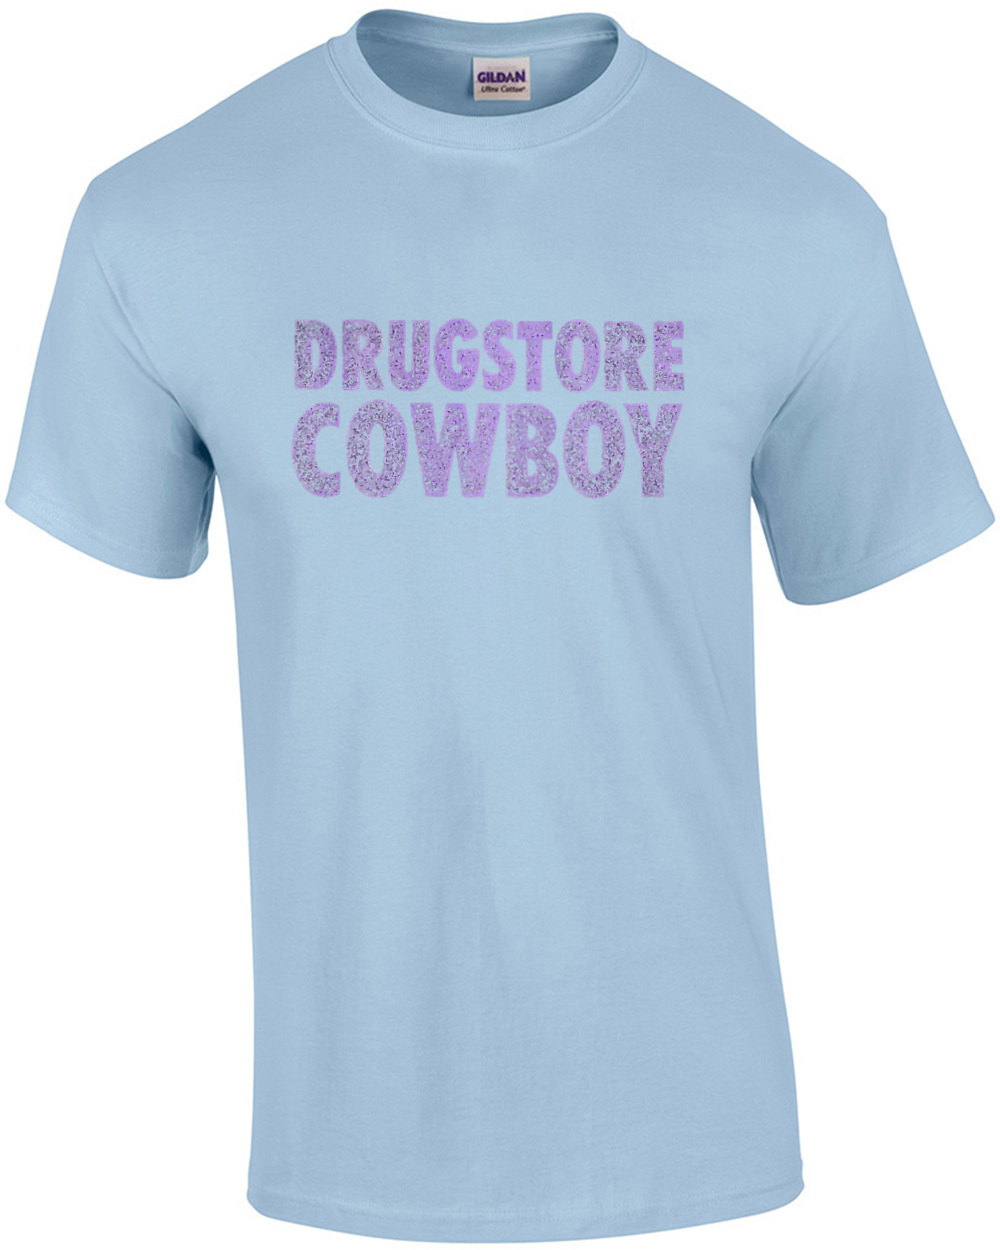 Drugstore Cowboy - 80's T-Shirt